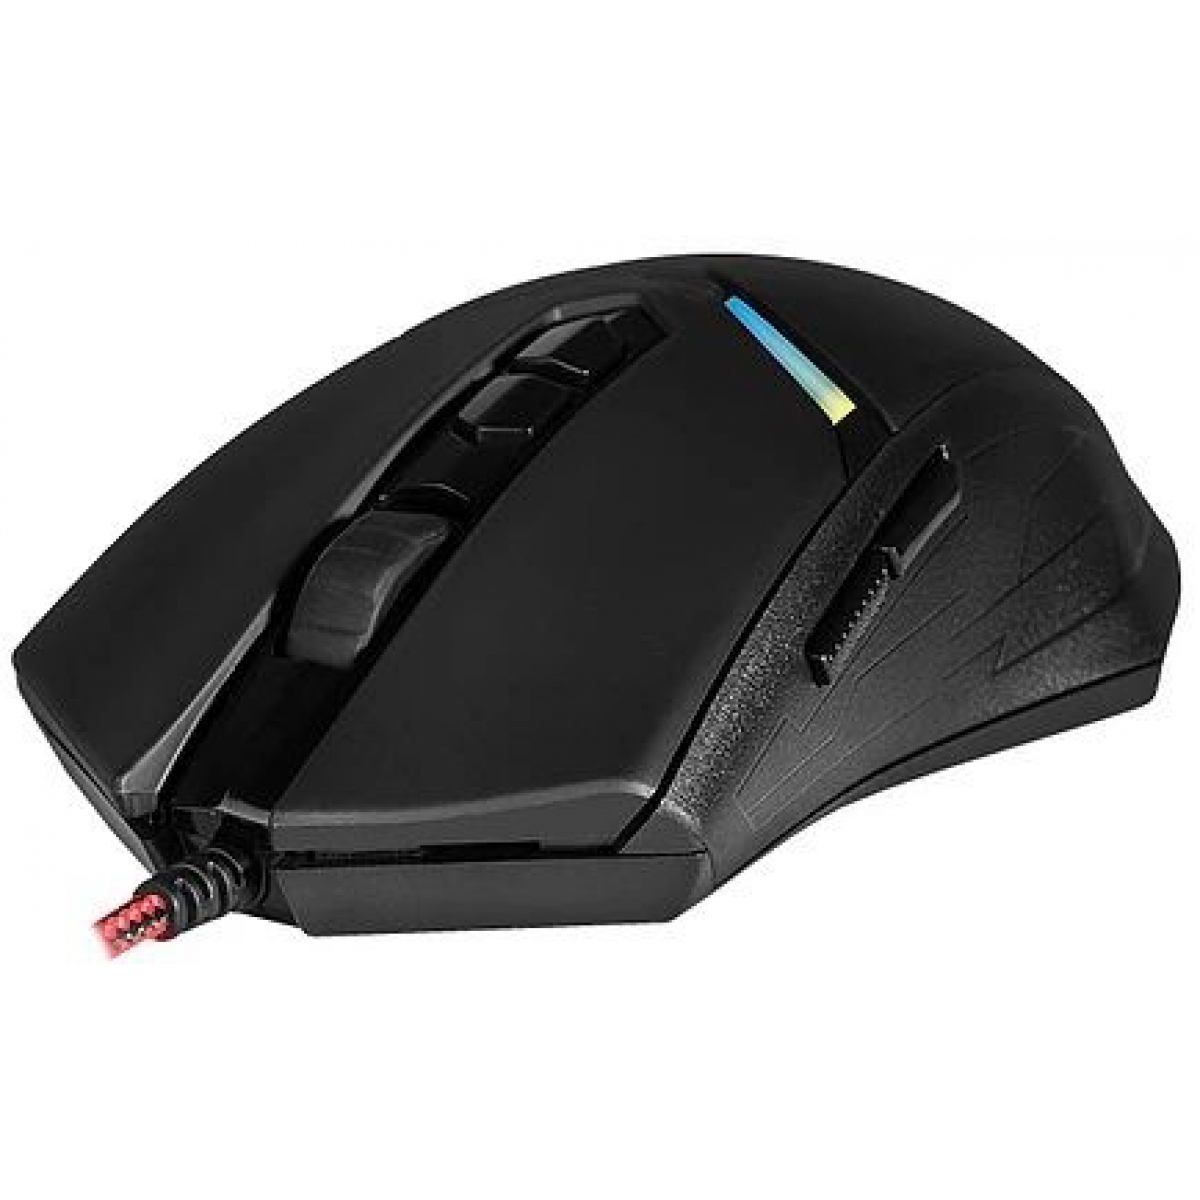 Mouse Gamer Redragon Nemeanlion 2 M602-1, 7200 DPI, 2 Botões Programável, Black